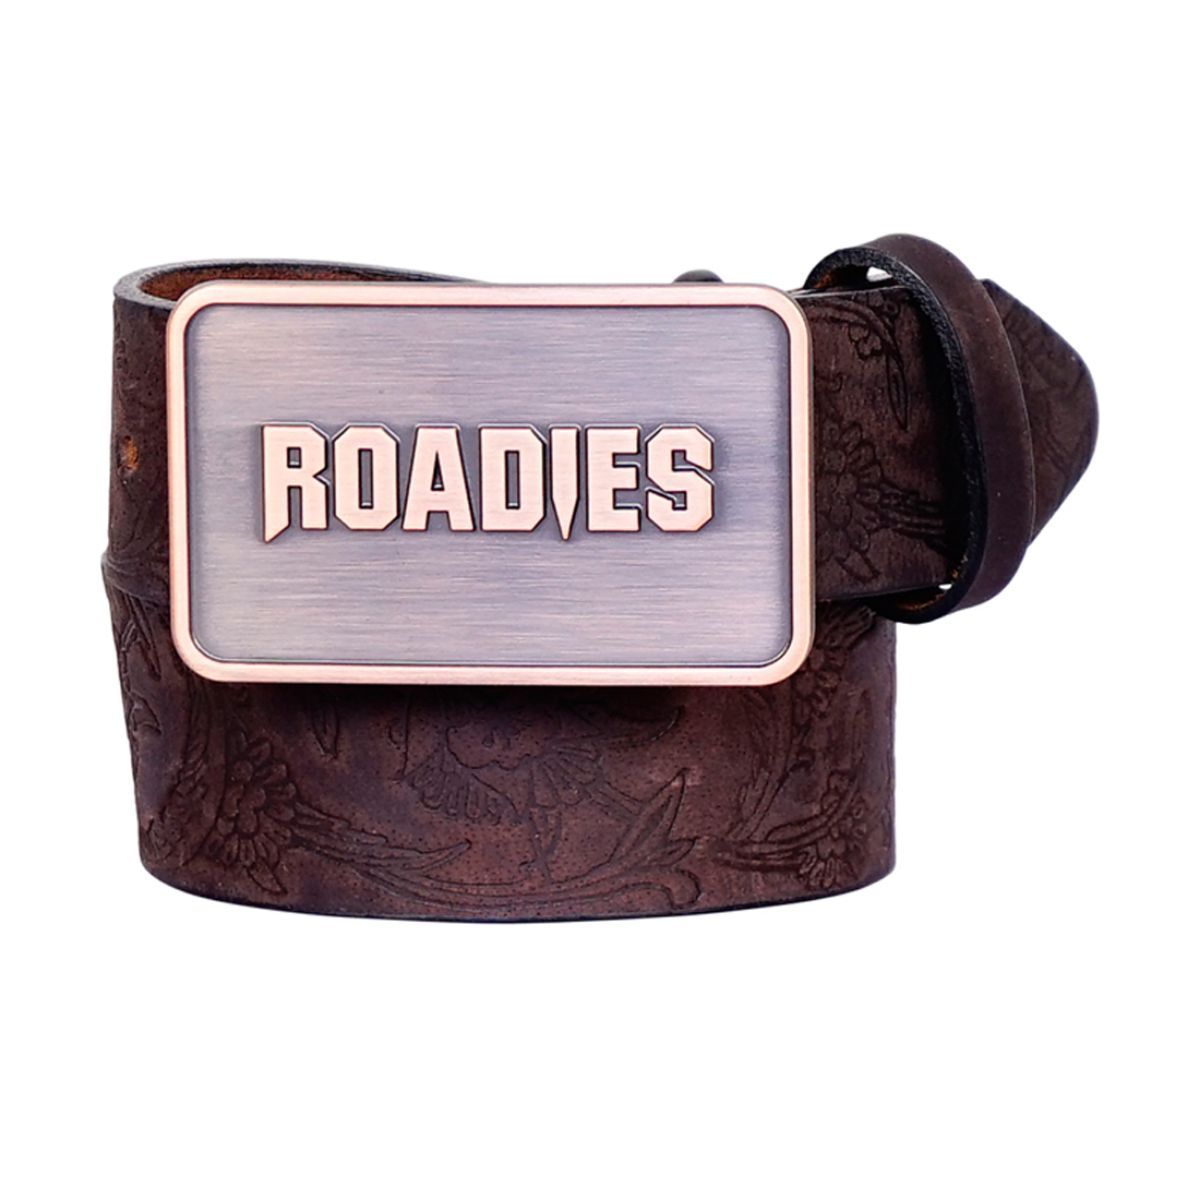 Justanned Roadies By Engraved Buckle Men'S Leather Belt (30)